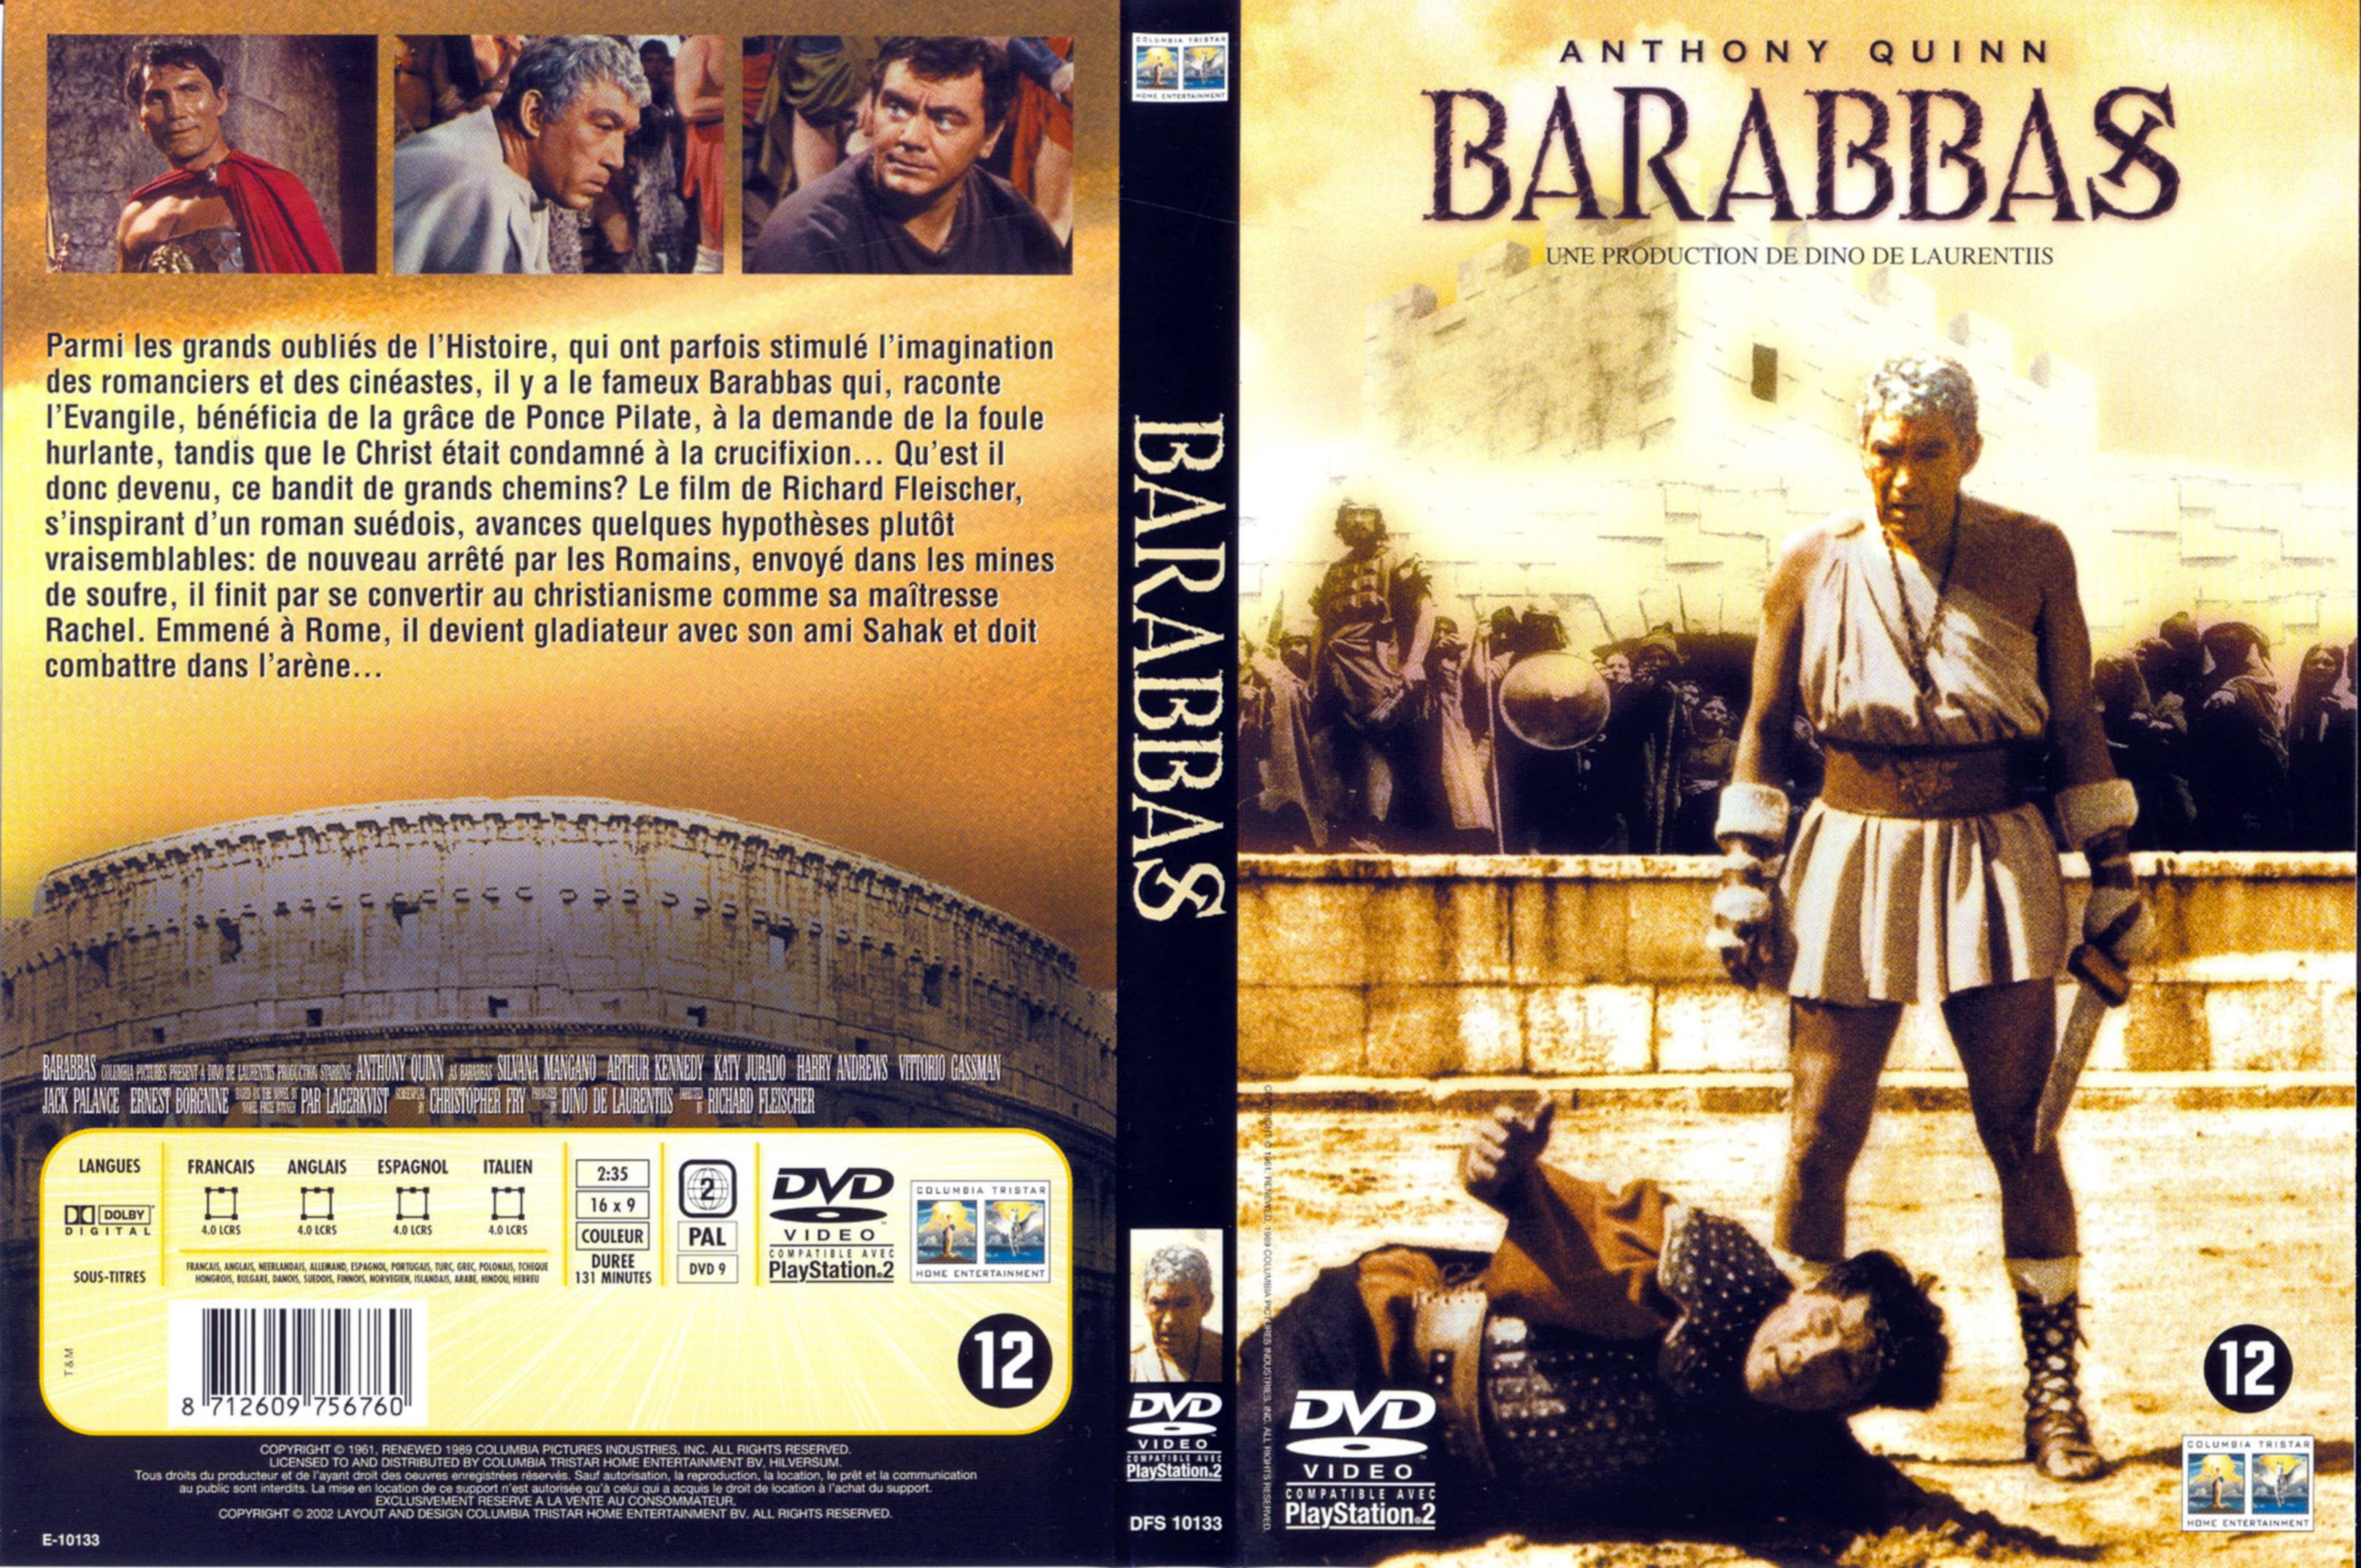 Jaquette DVD Barabbas v2